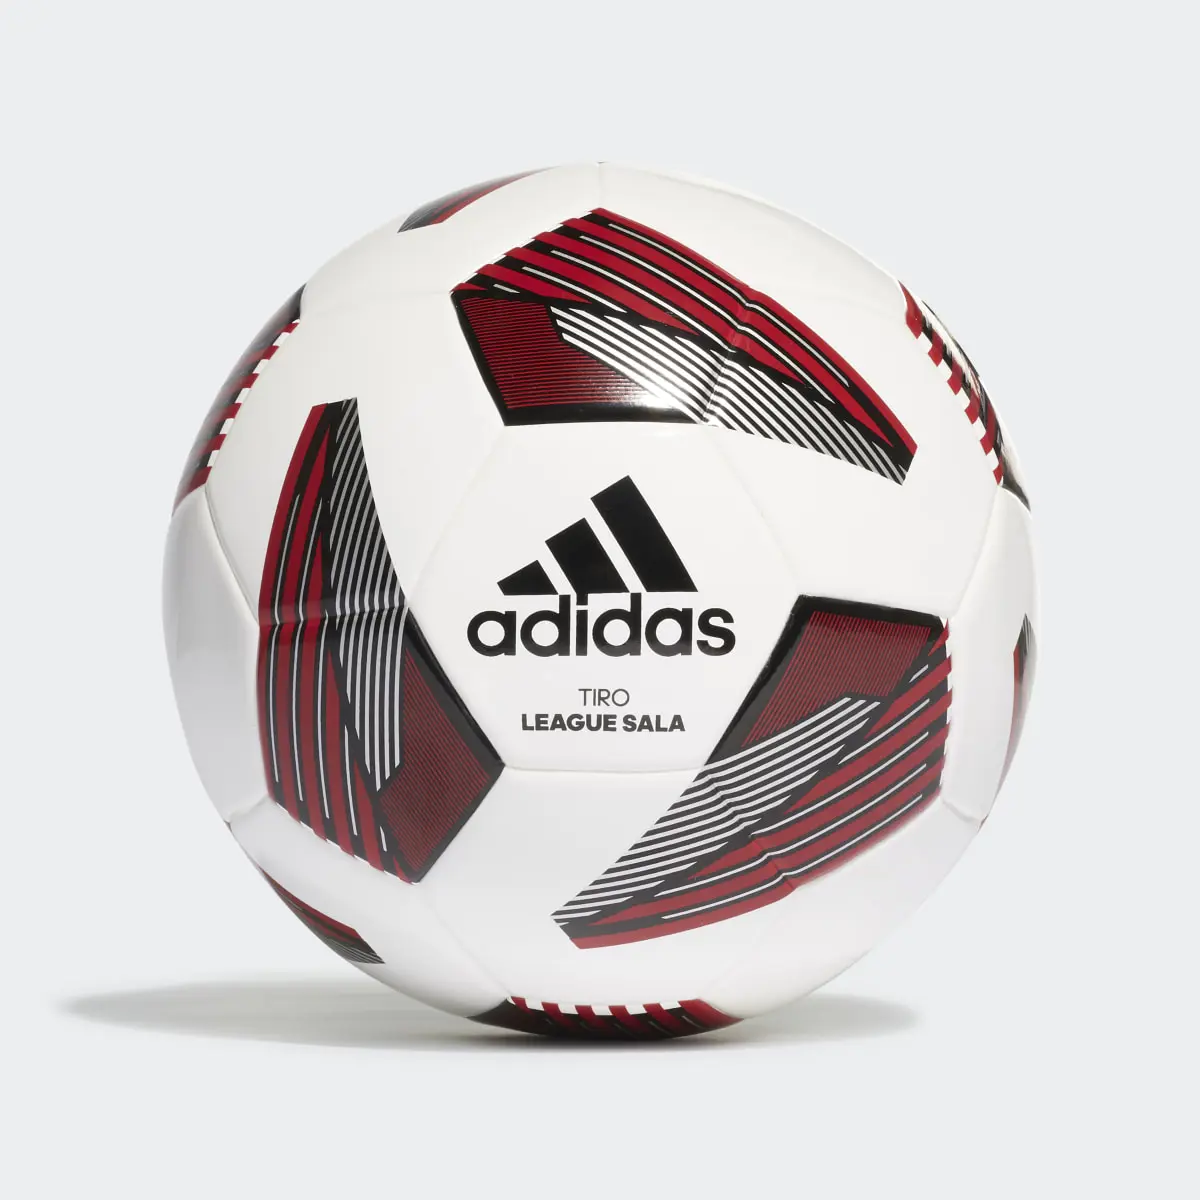 Adidas Tiro League Sala Ball. 2